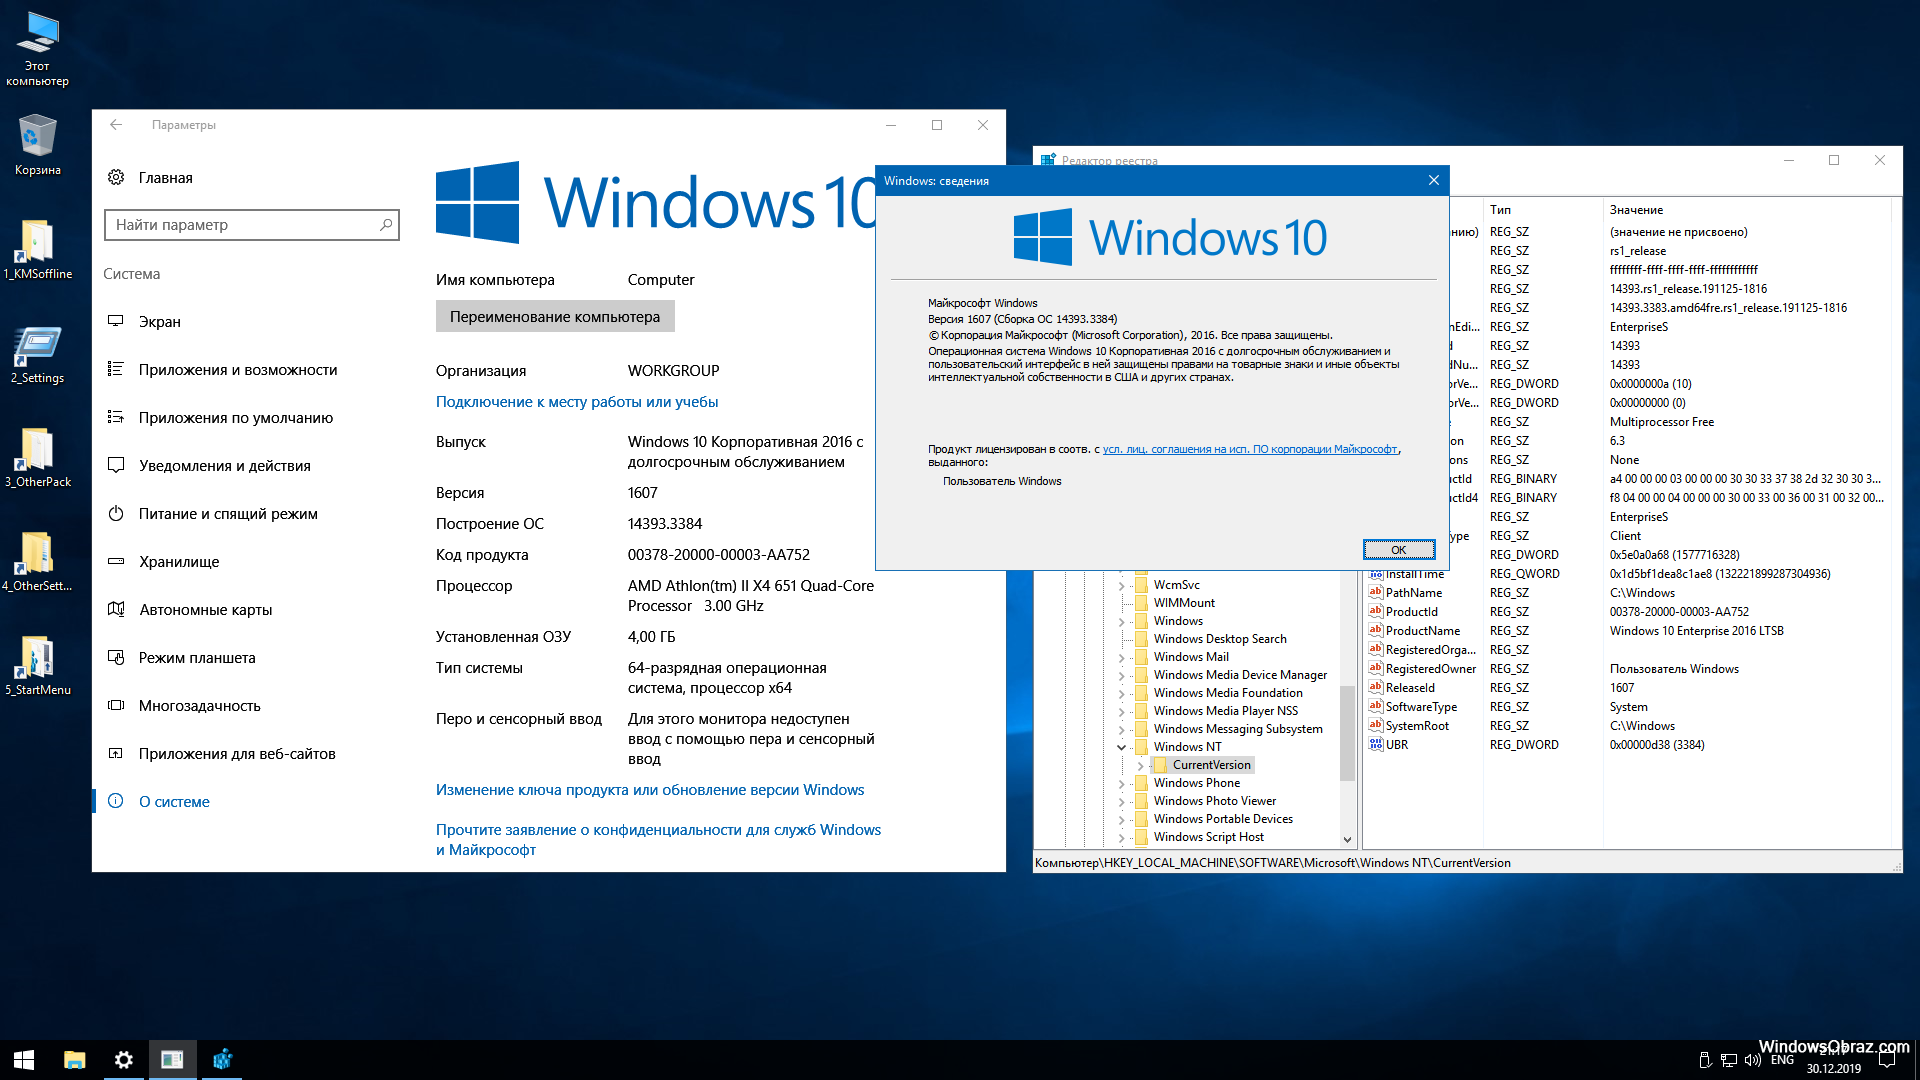 Windows 10 максимальная x64. Windows 10 LTSB 1607. ОС Microsoft Windows 10 Enterprise 2016 LTSB. Windows 10 LTSB 1607 64. Windows 10 Enterprise корпоративная.